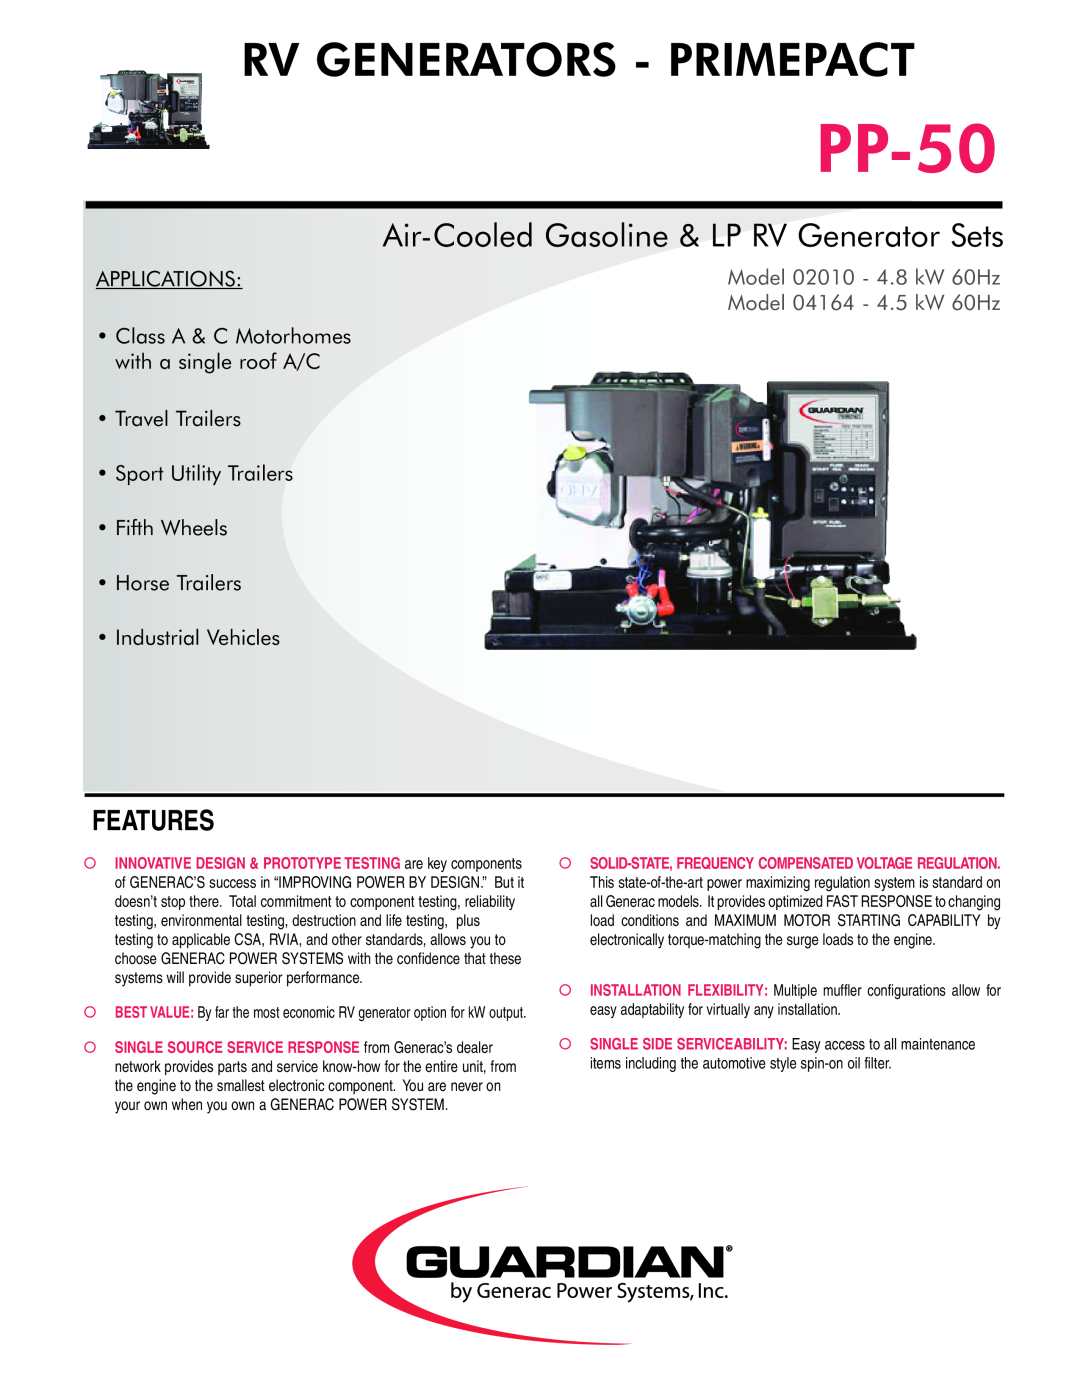 Guardian Technologies PP-50 manual Features, Rv Generators - Primepact, Air-CooledGasoline & LP RV Generator Sets 